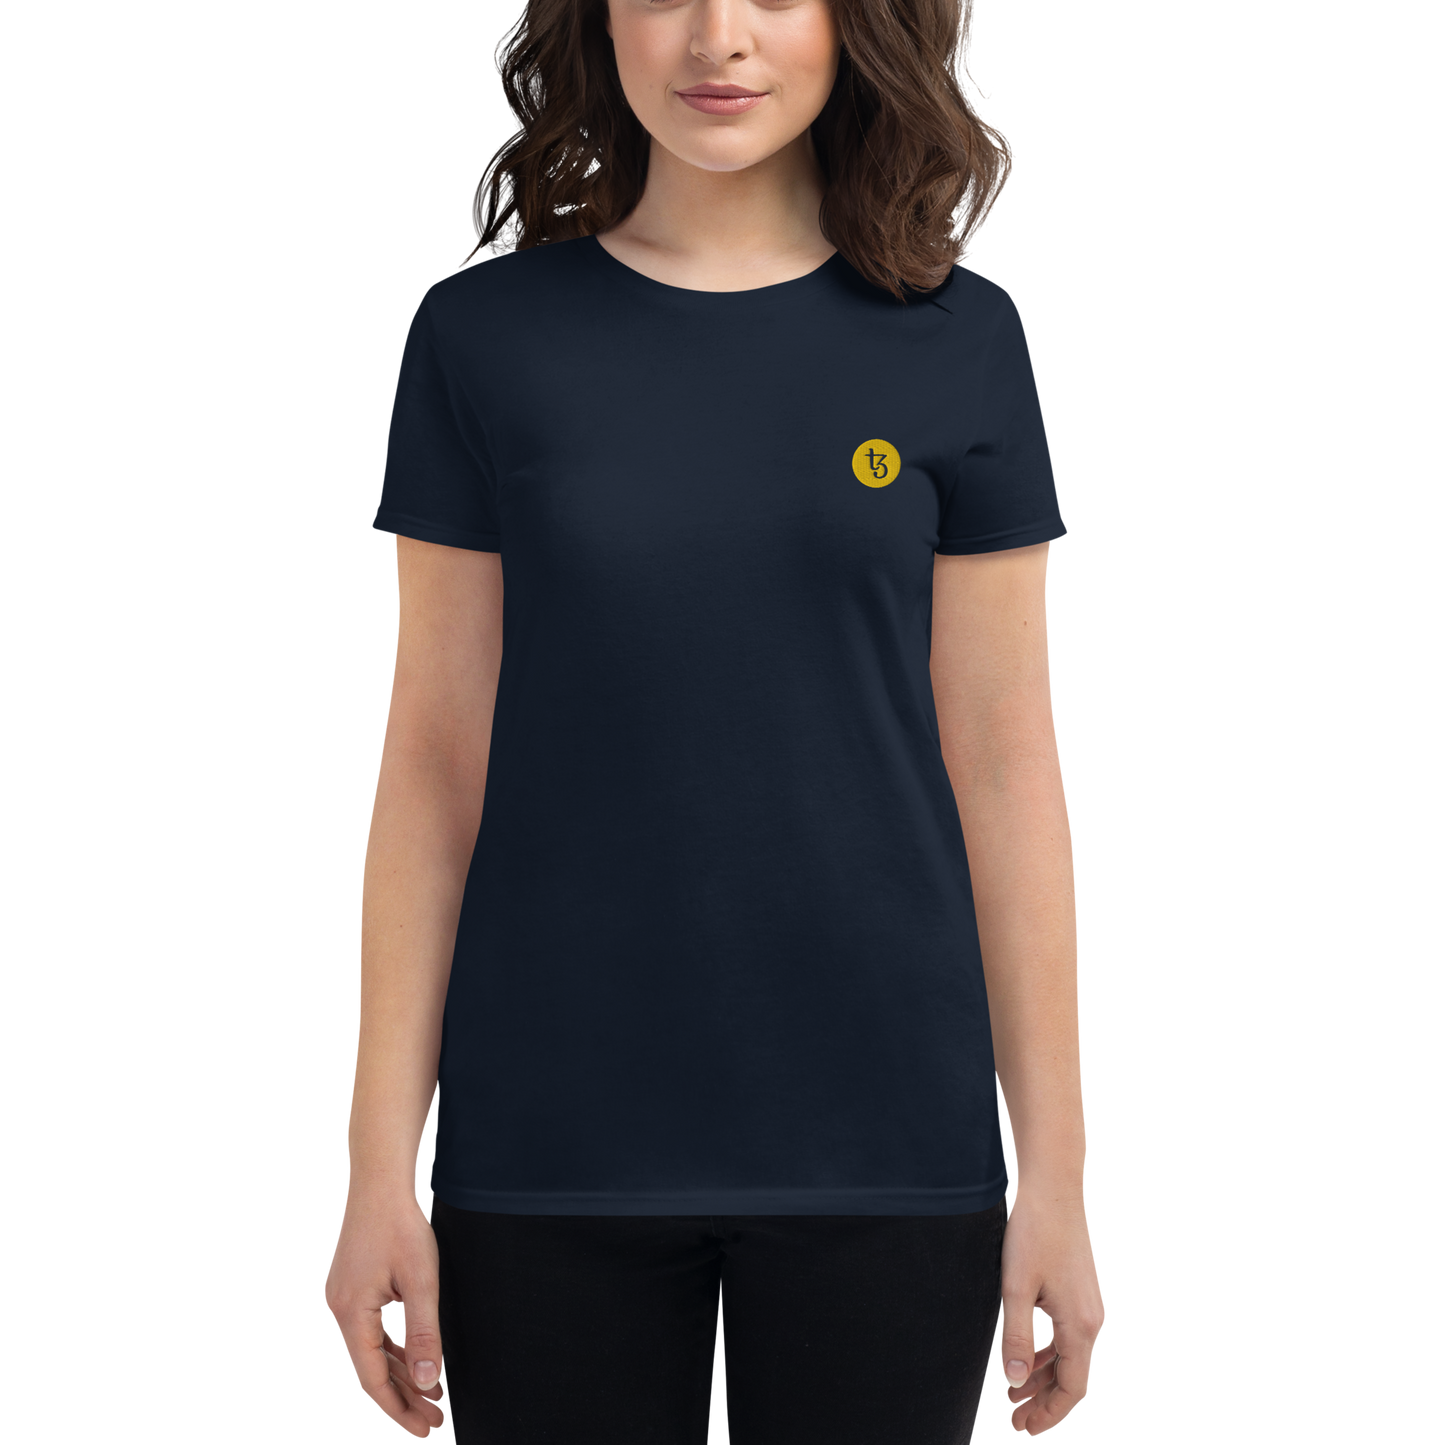 Tezos (XTZ) - Women's short sleeve t-shirt